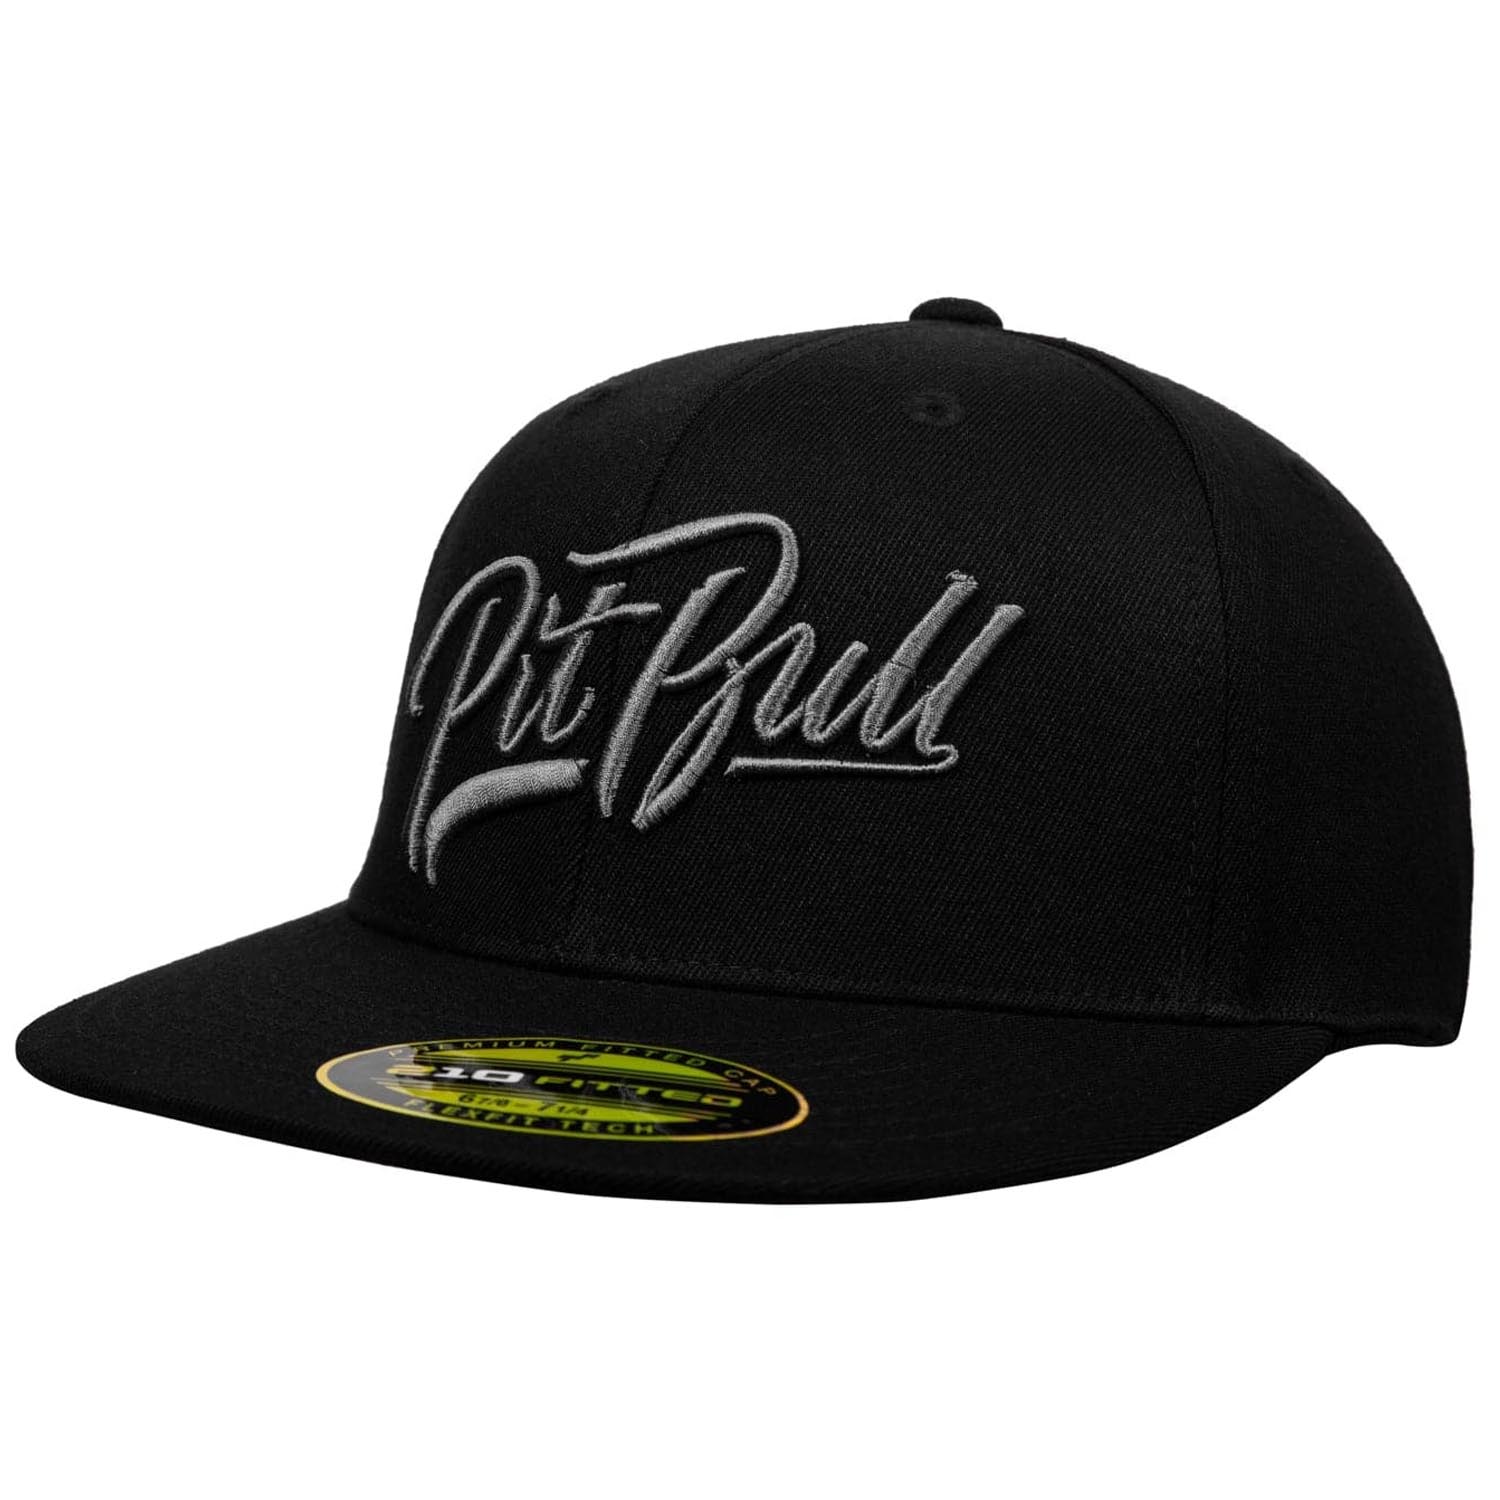 Pit Bull West Coast Full Cap, El Jeffe YP Classic, schwarz-grau, S/M